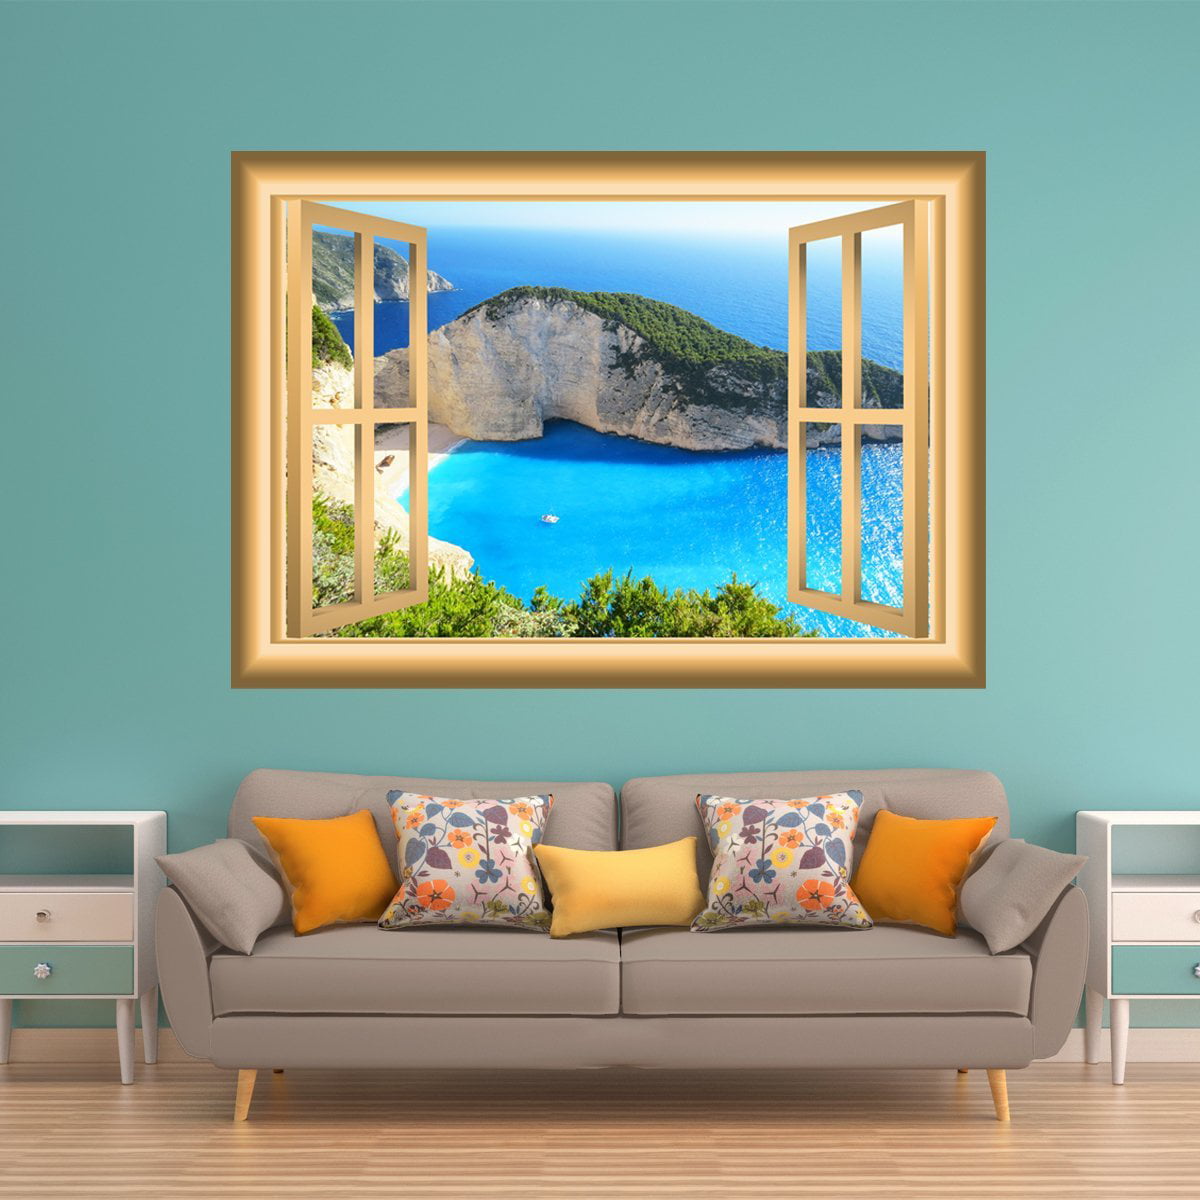 VWAQ Ocean View Wall Decor Window Decal Nature Scene Bedroom Art